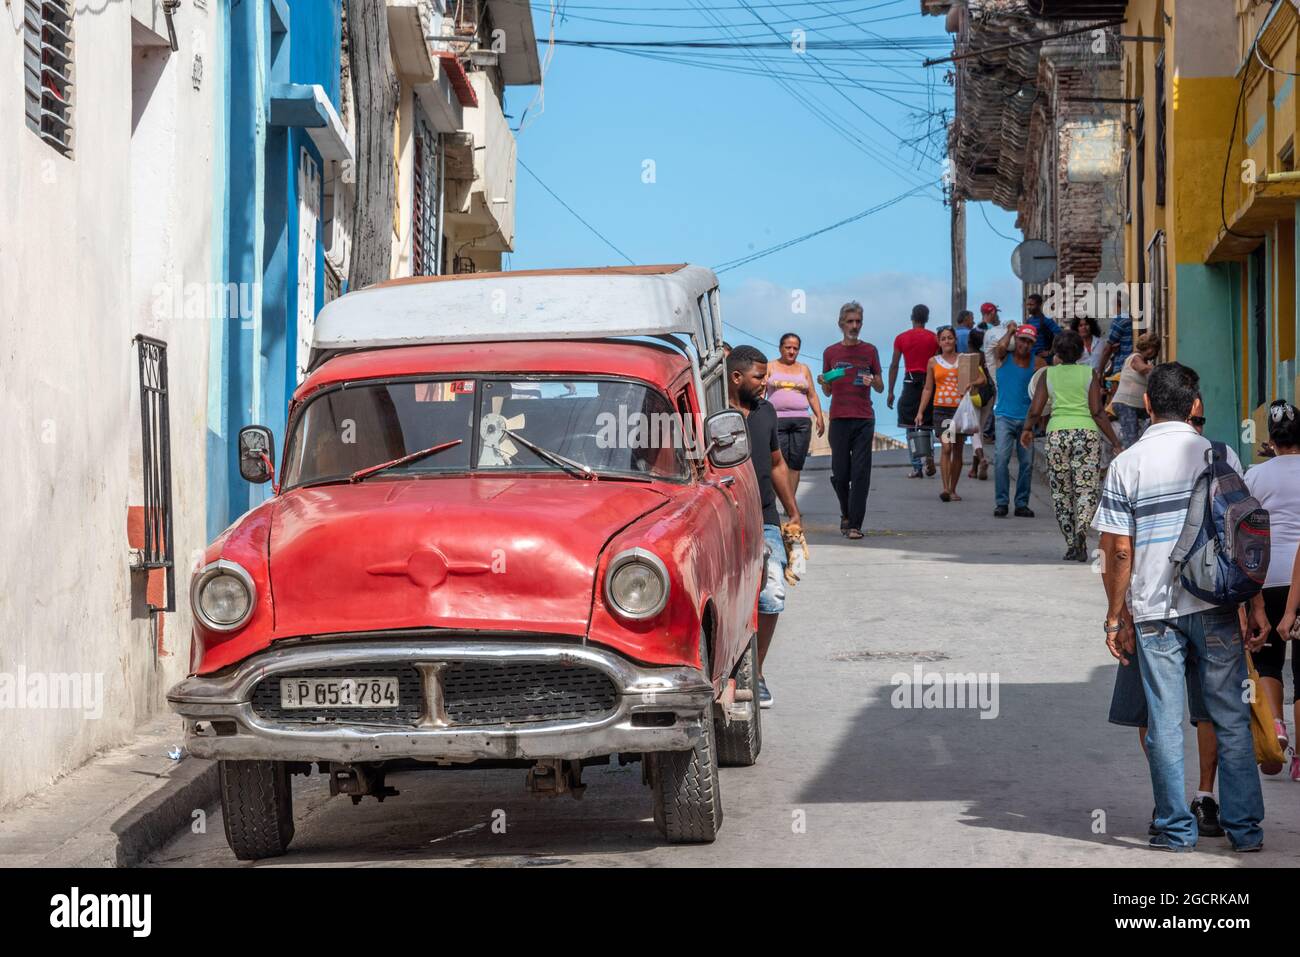 Auto d'epoca e vita cittadina americana, Santiago de Cuba, Cuba, 2016 Foto Stock